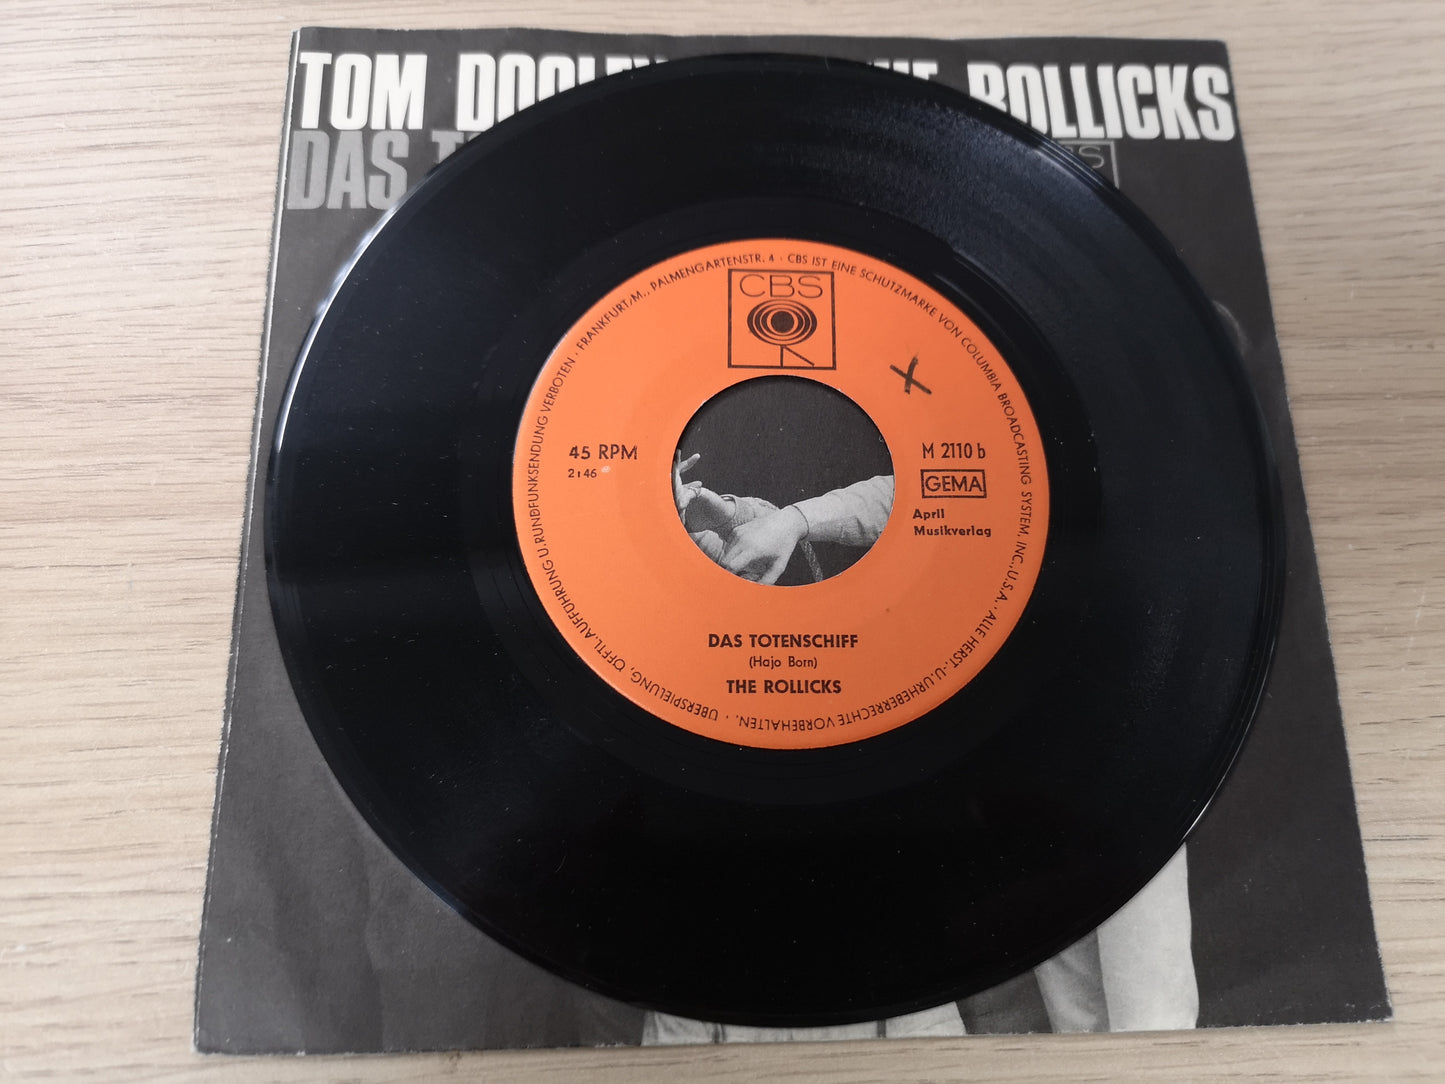 Rollicks "Tom Dooley" Orig Germany 1965 EX/VG++ (7" Single)